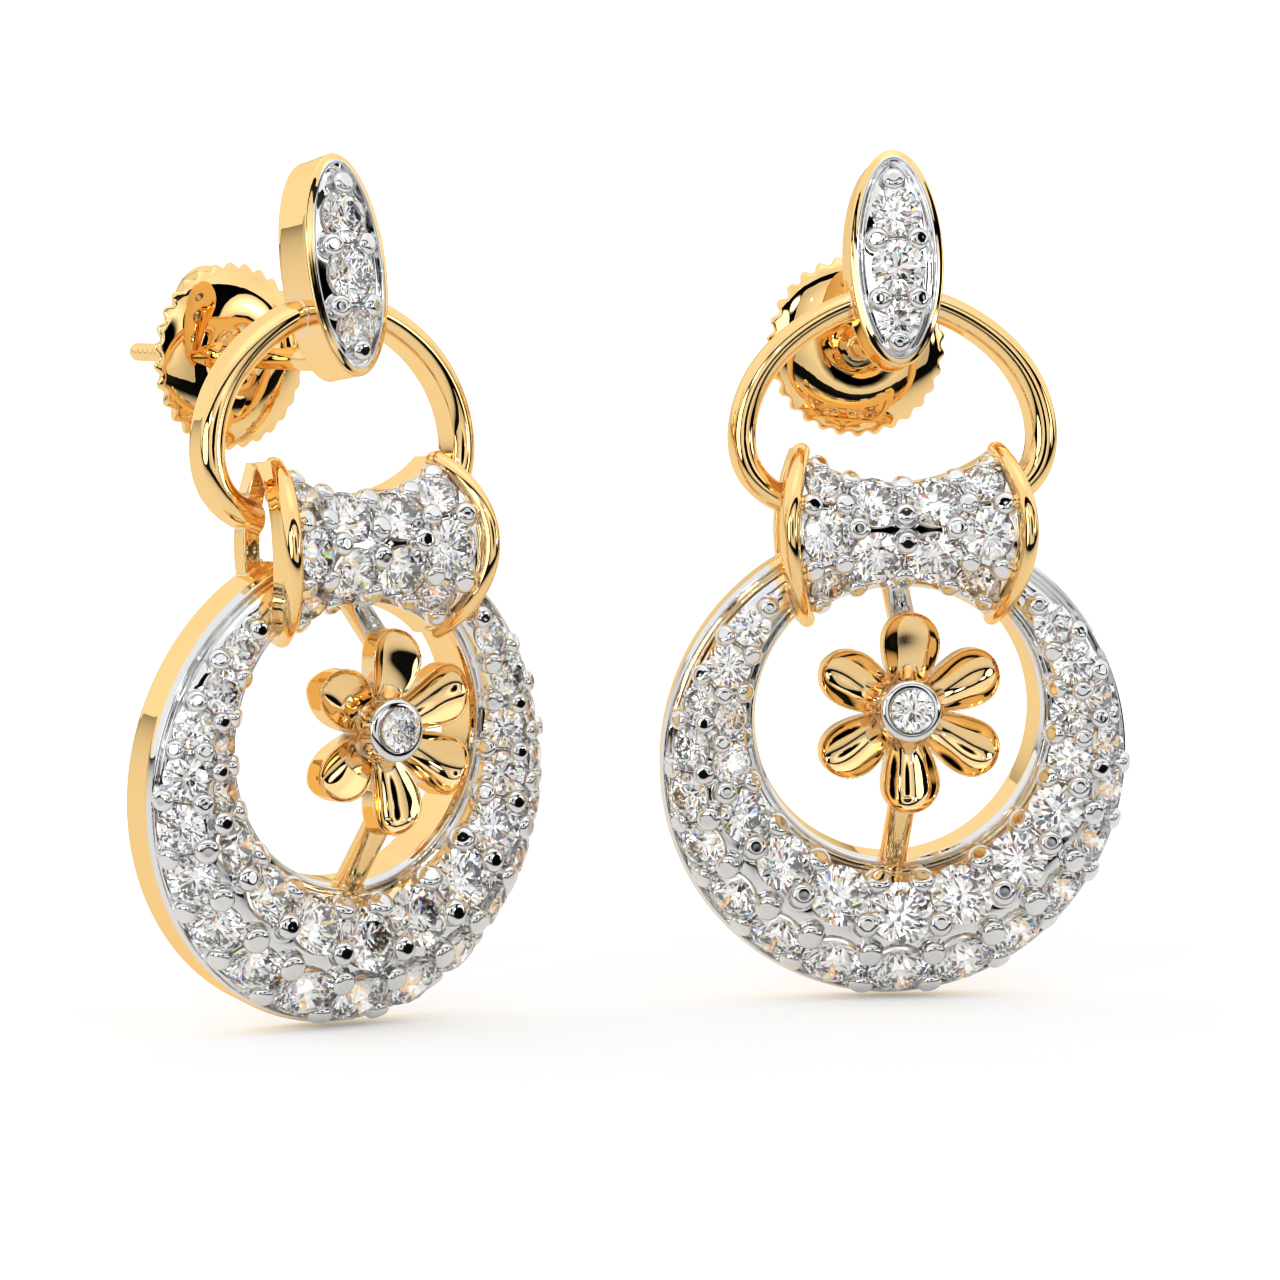 The Spherical Flower Diamond Stud Earrings